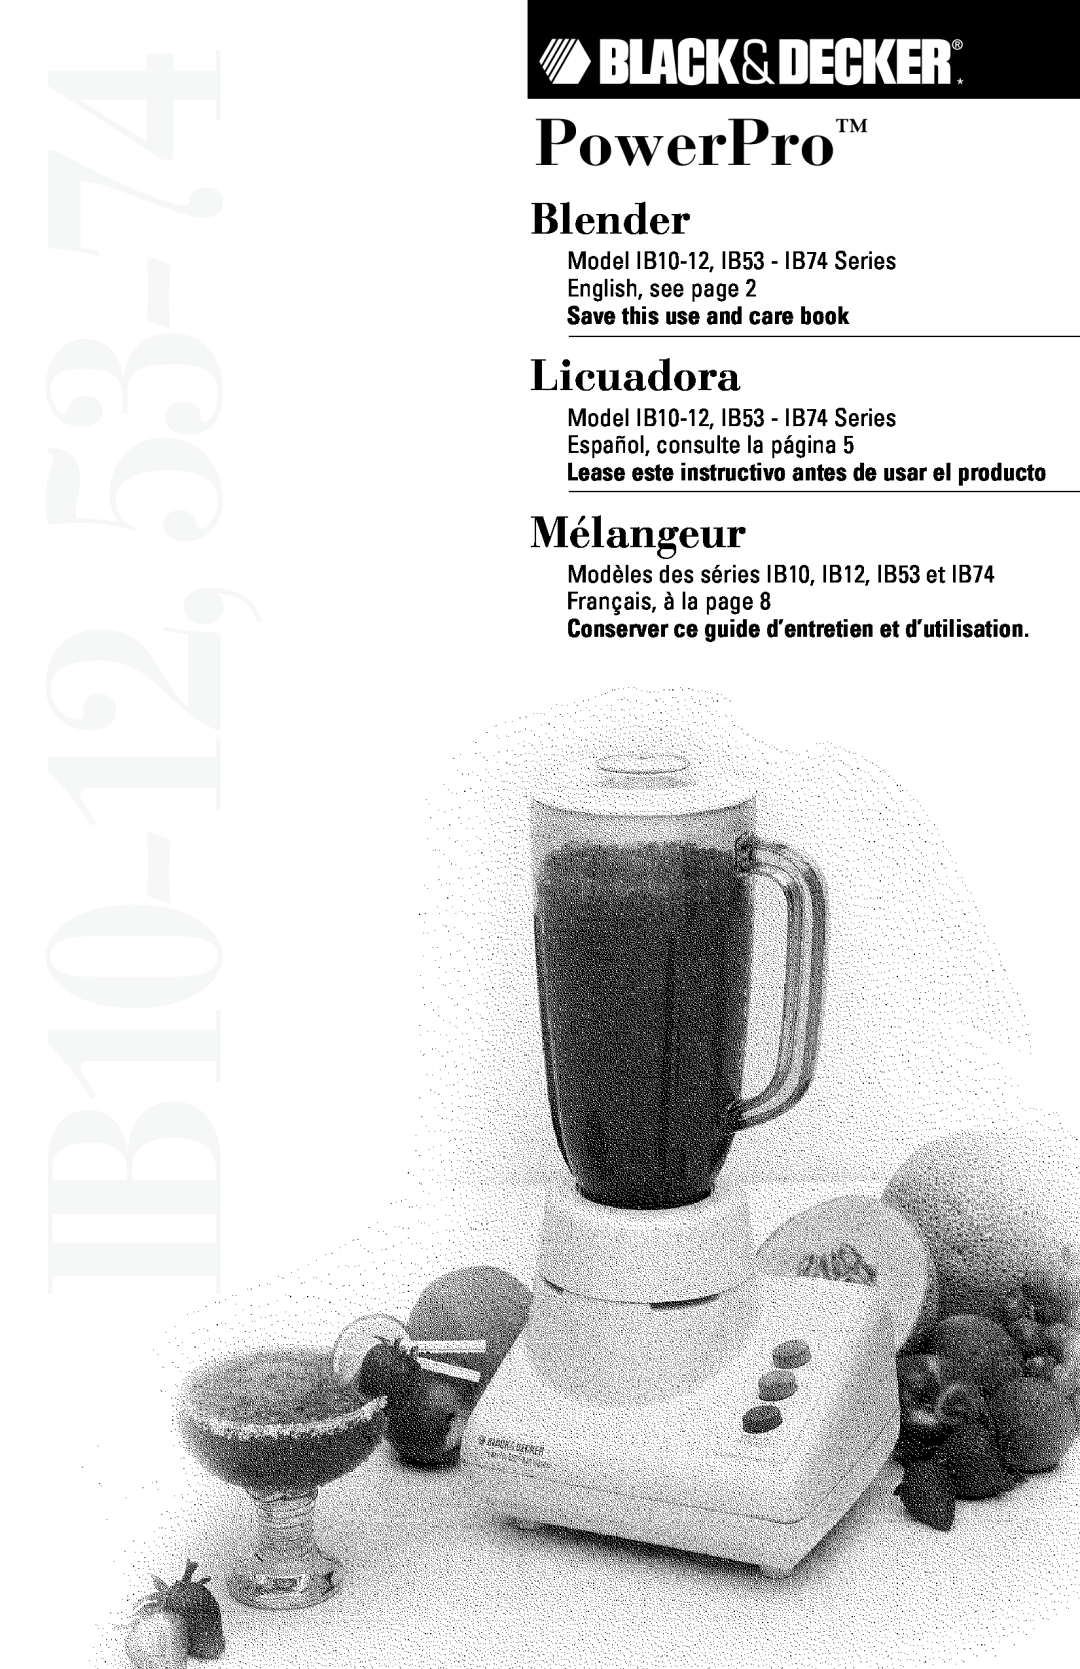 Black & Decker manual PowerPro, Blender, Licuadora, Mélangeur, Model IB10-12,IB53 - IB74 Series, English, see page 